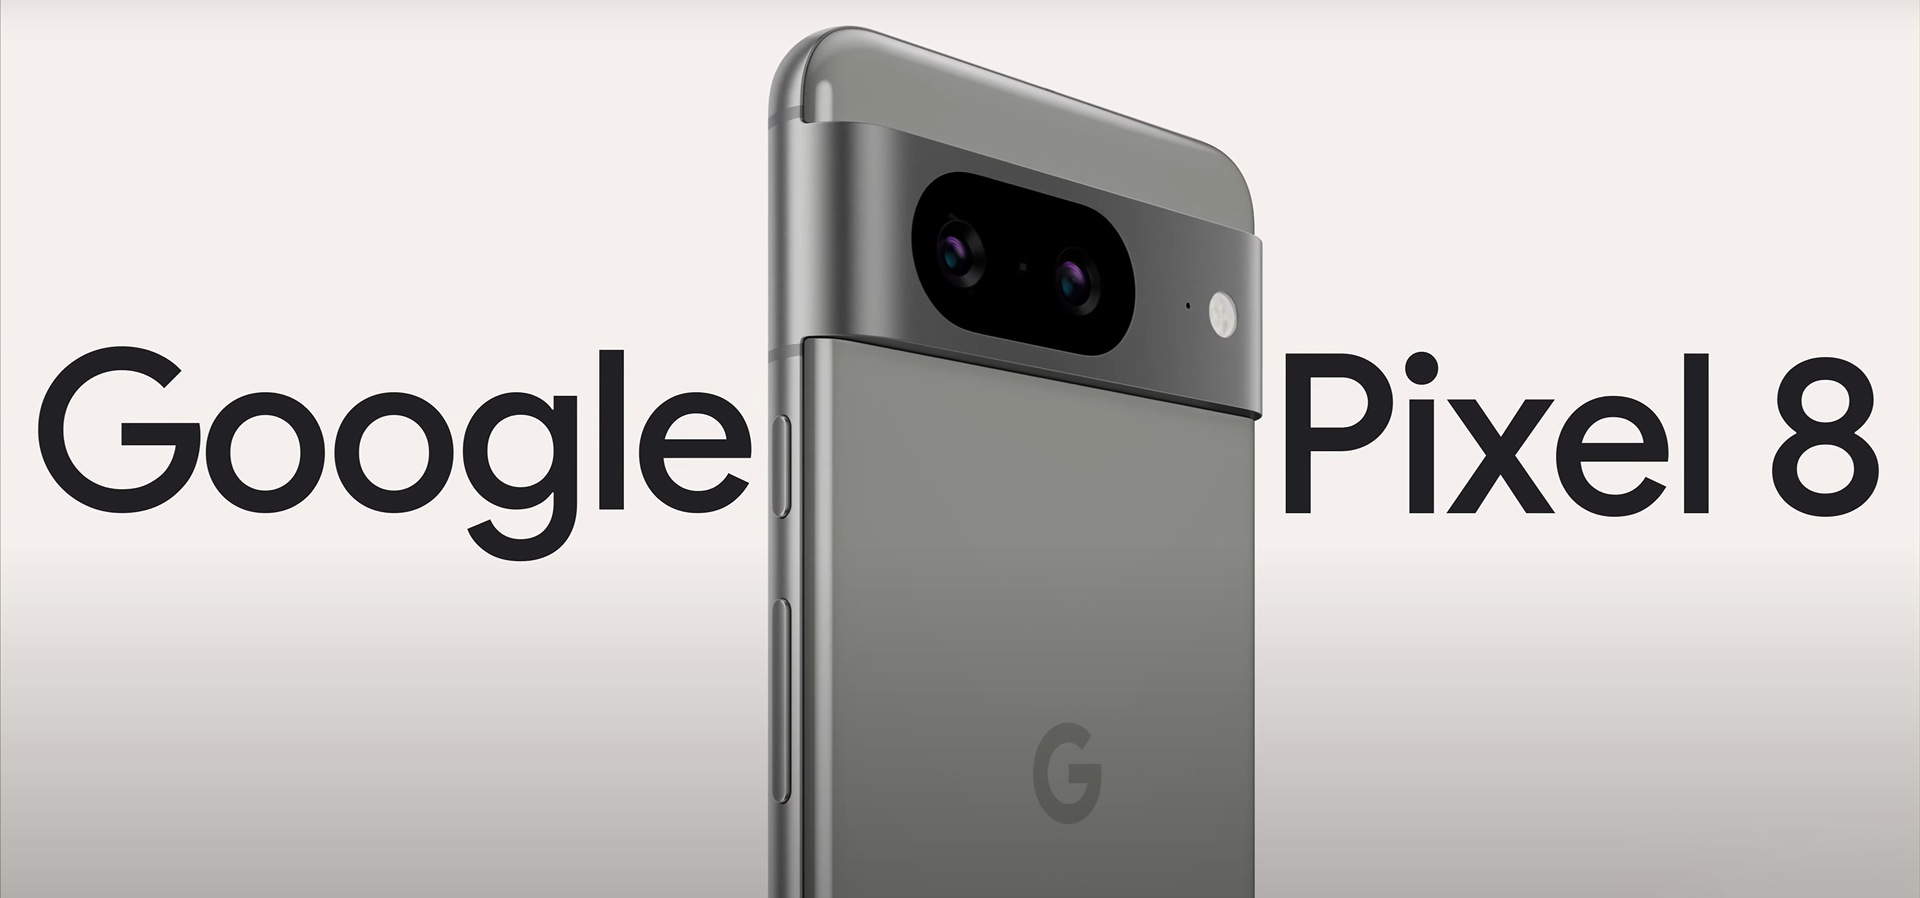 Google Pixel 8. Photo: Google